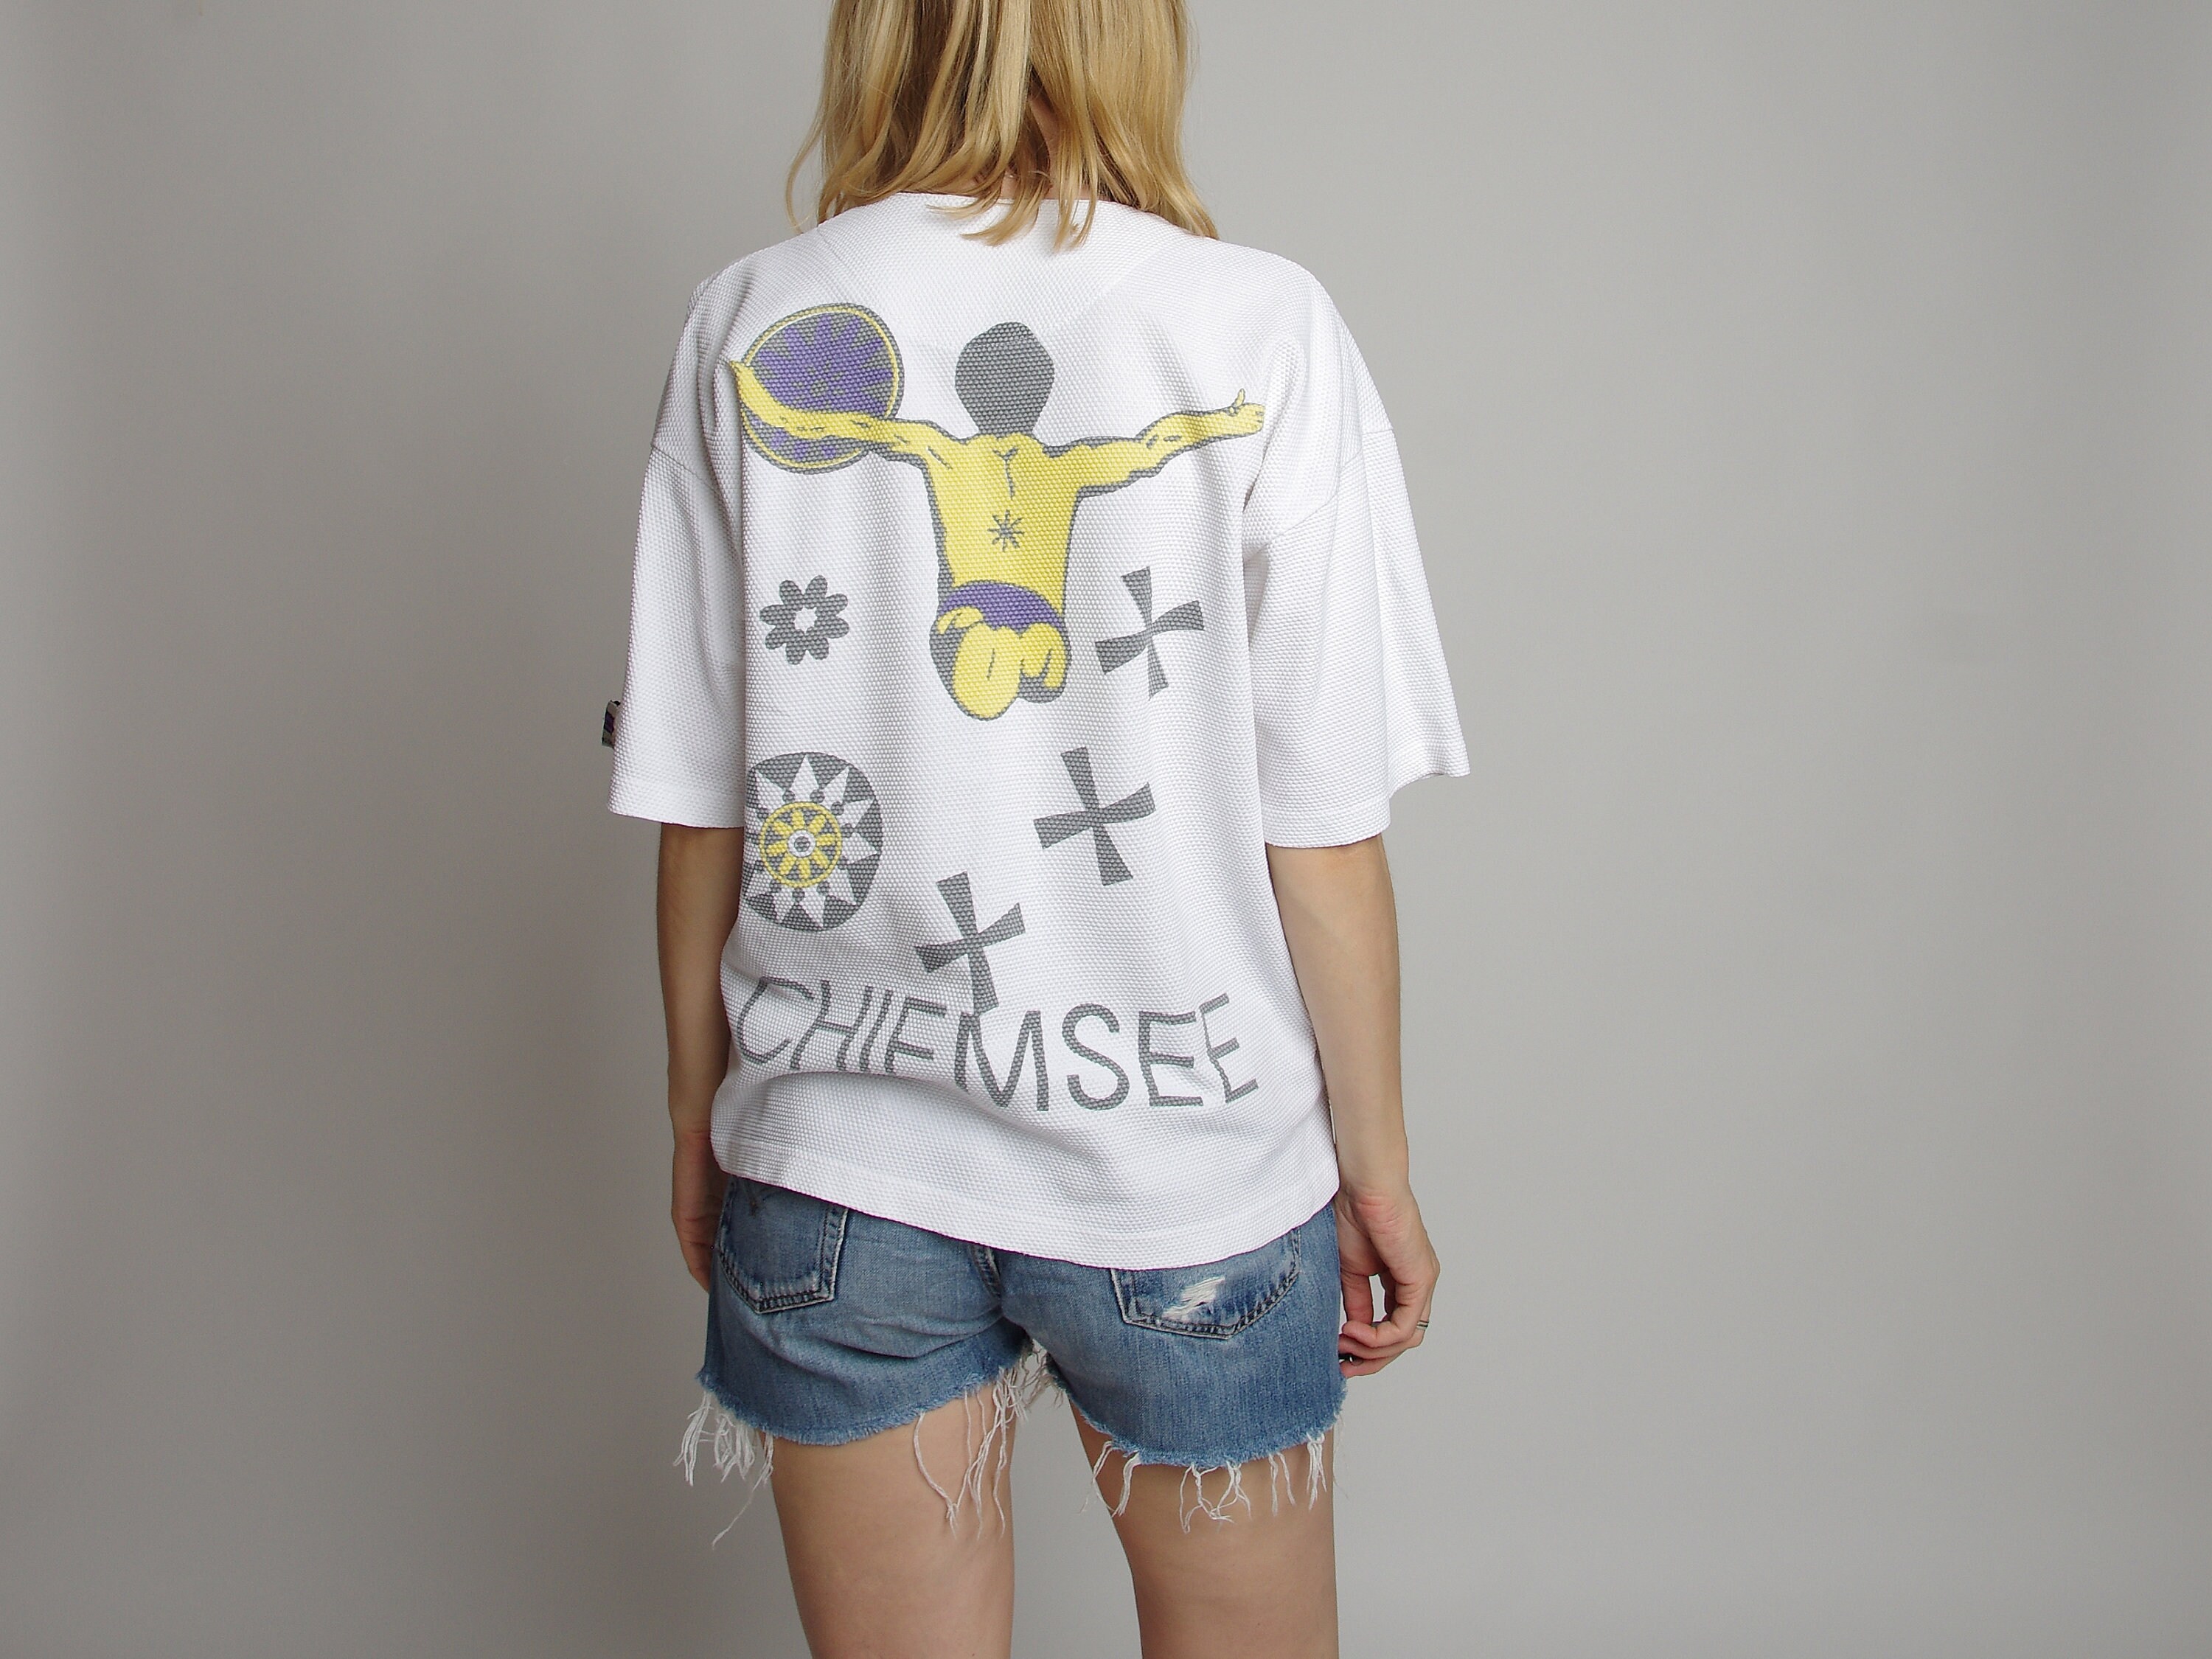 Chiemsee T Shirt - Etsy Israel